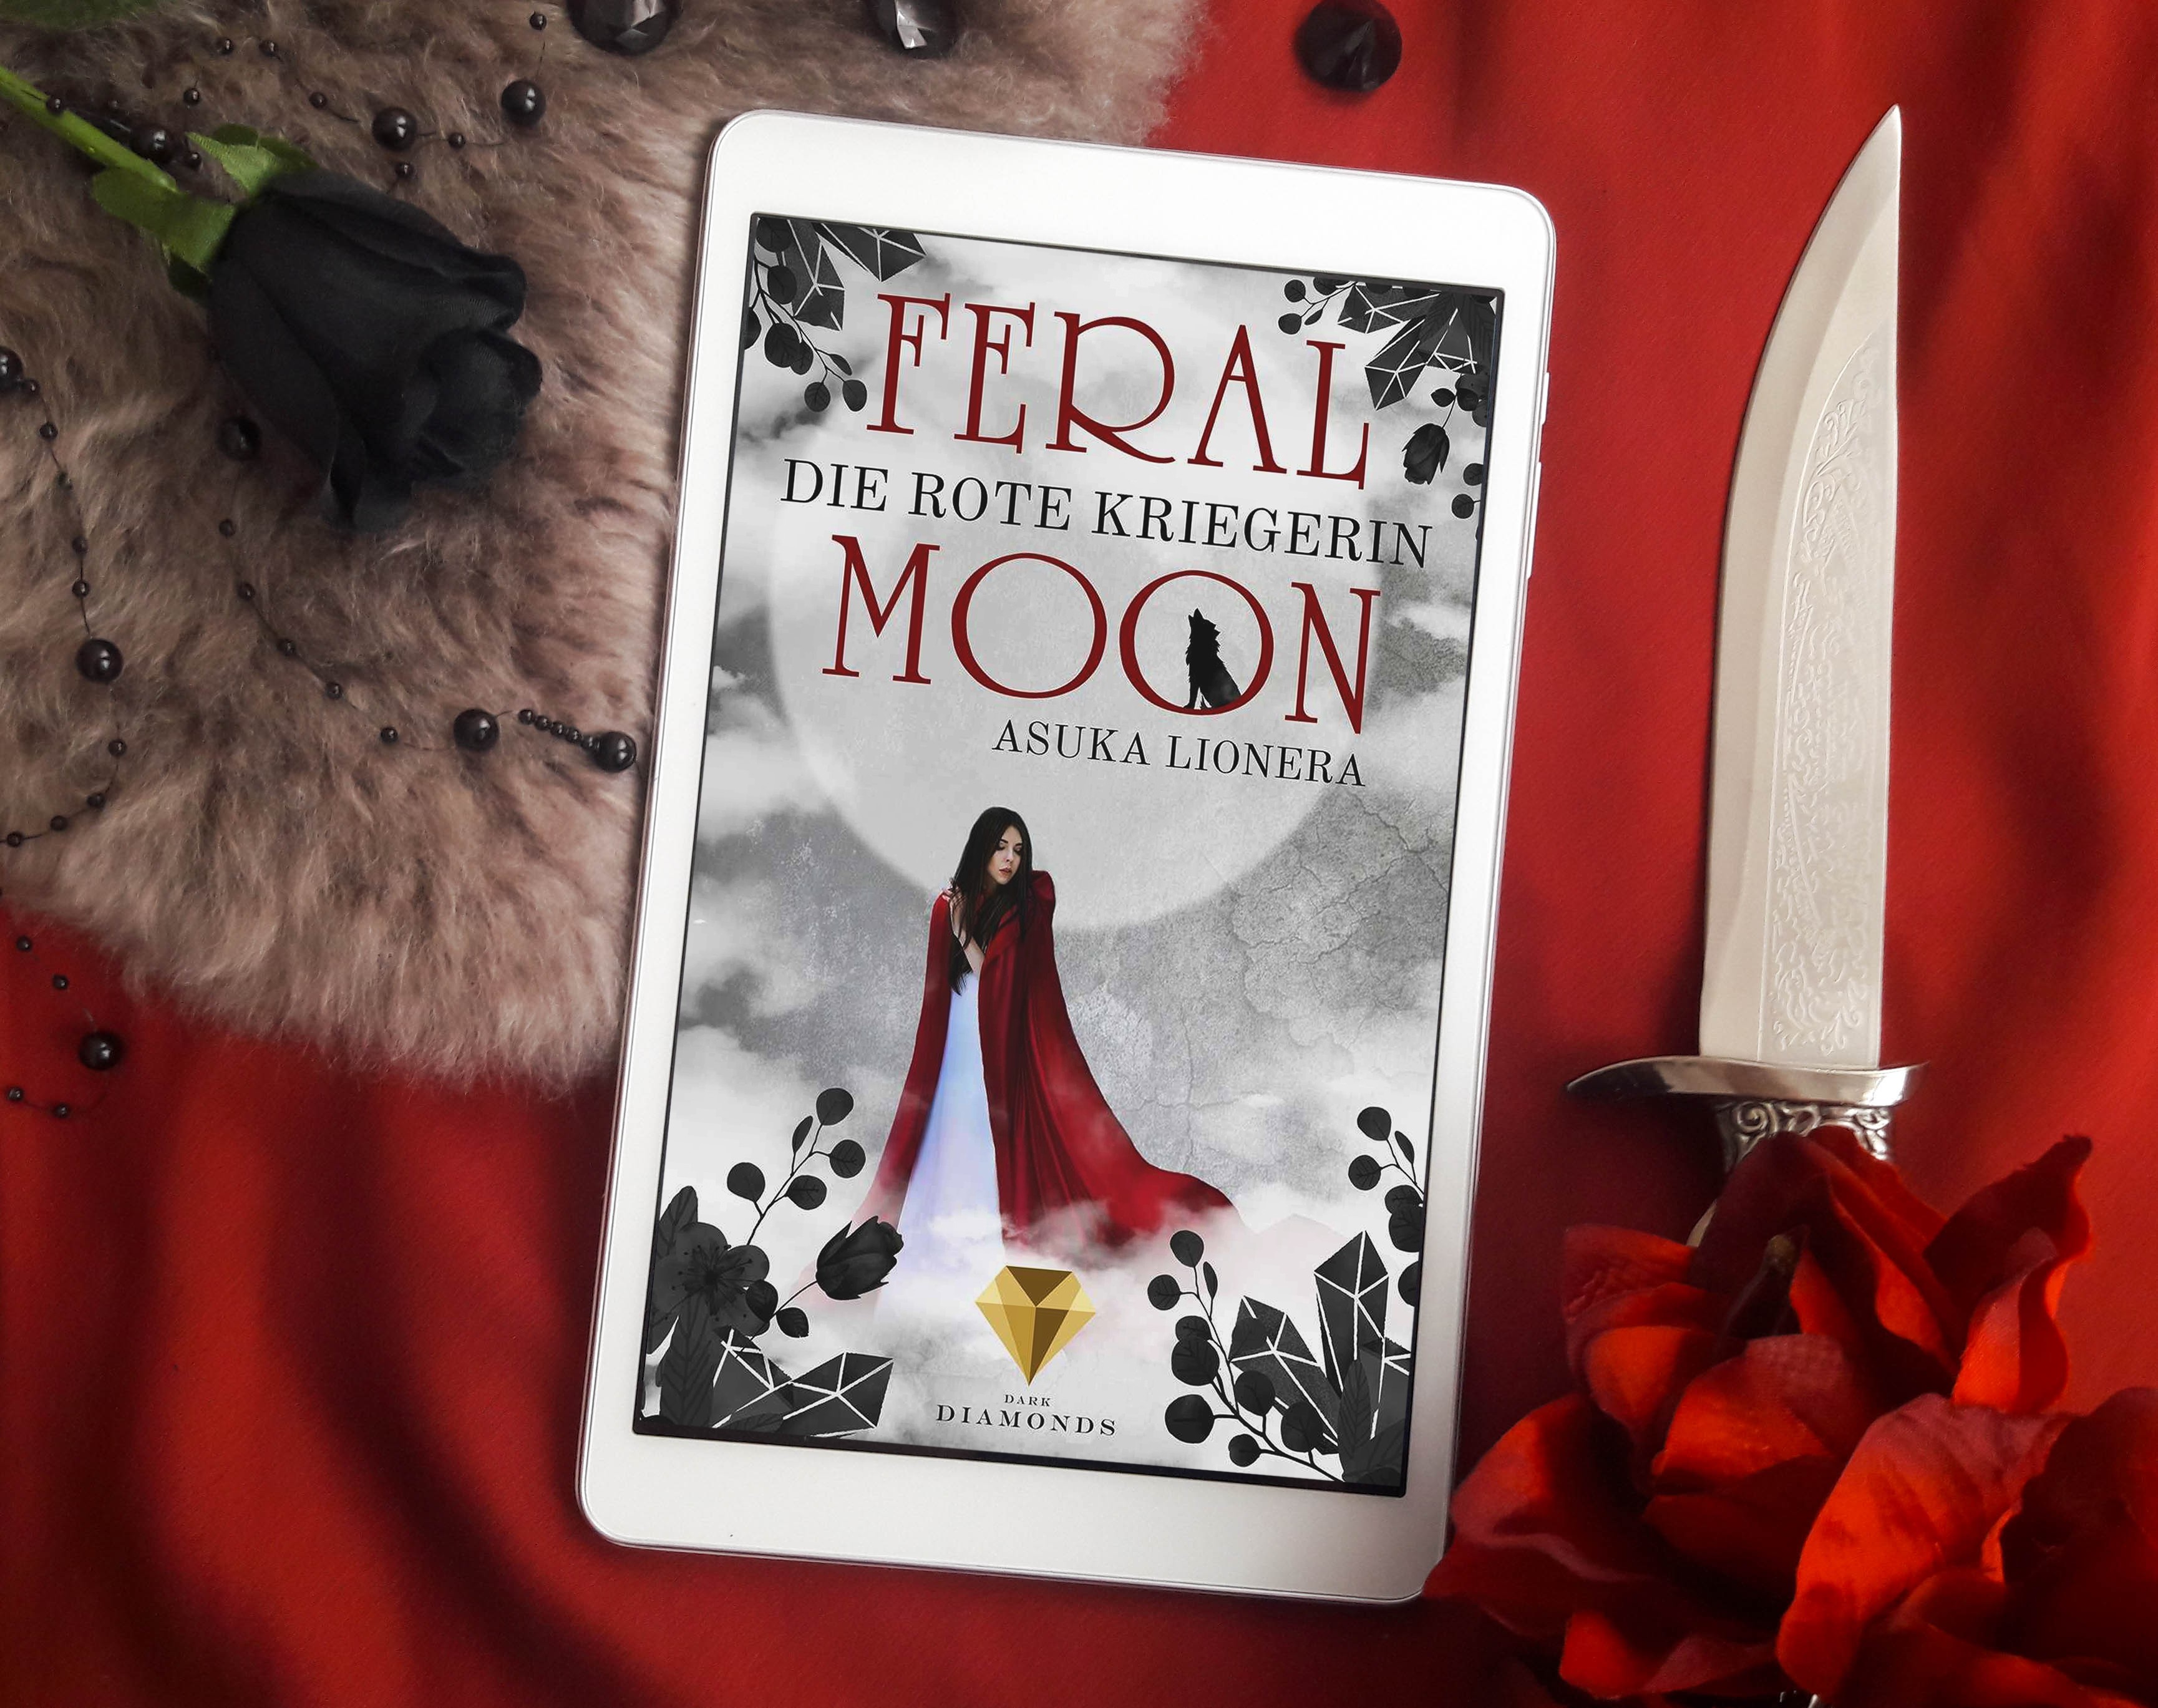 Feral Moon: Die rote Kriegerin – Asuka Lionera graphic